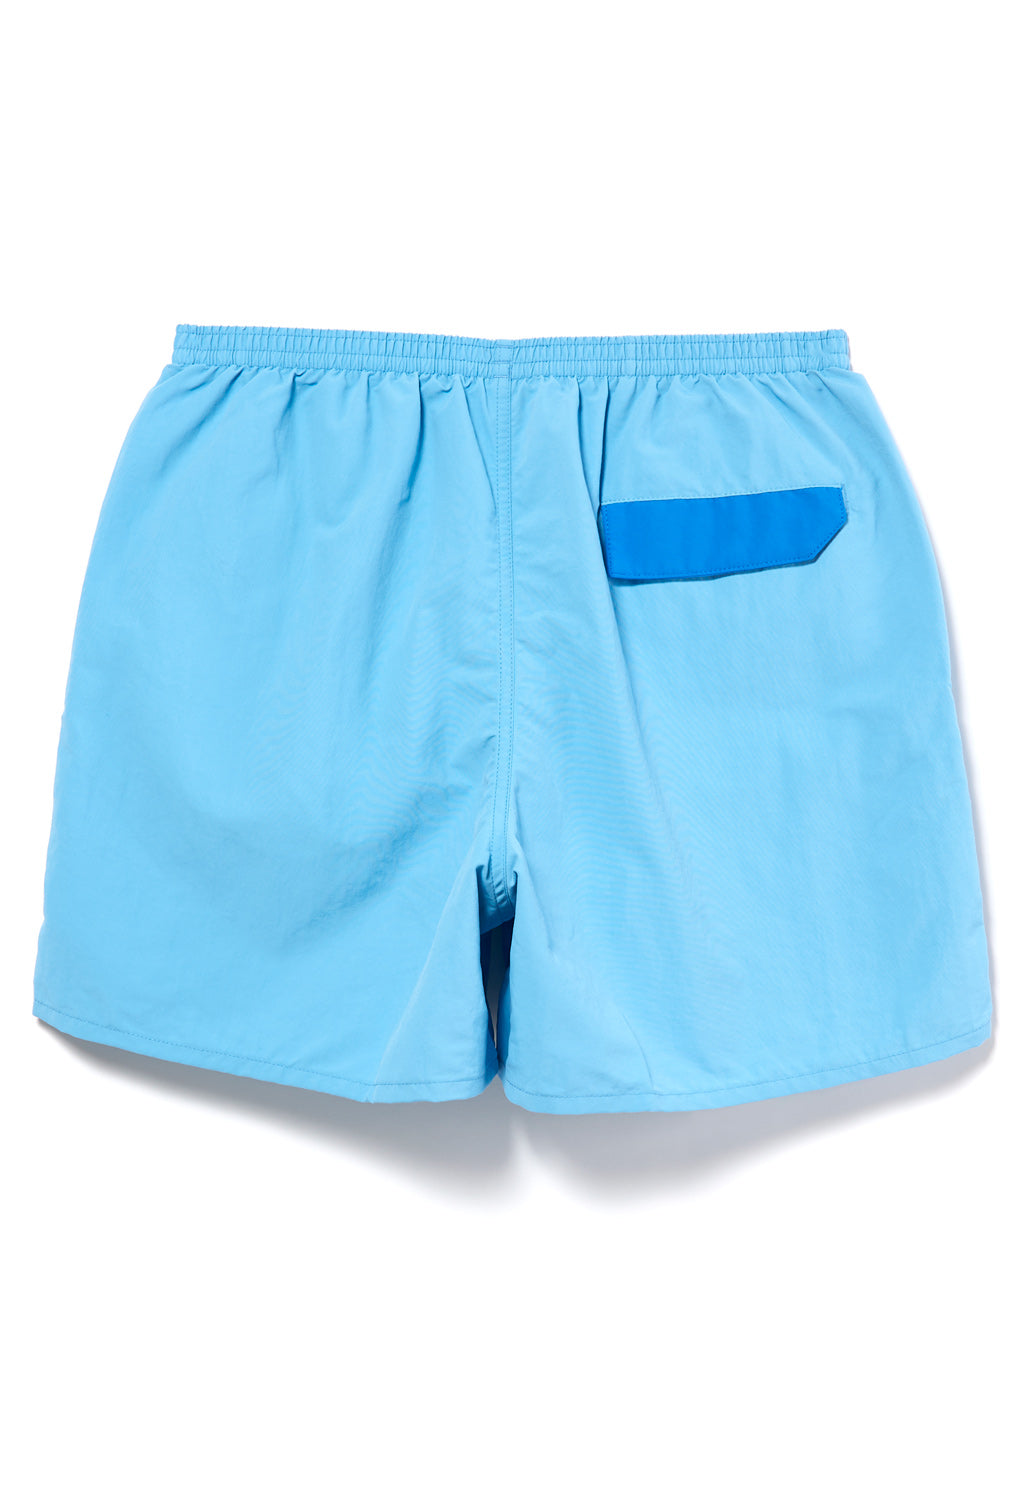 Patagonia Baggies Men's 5" Shorts - Lago Blue